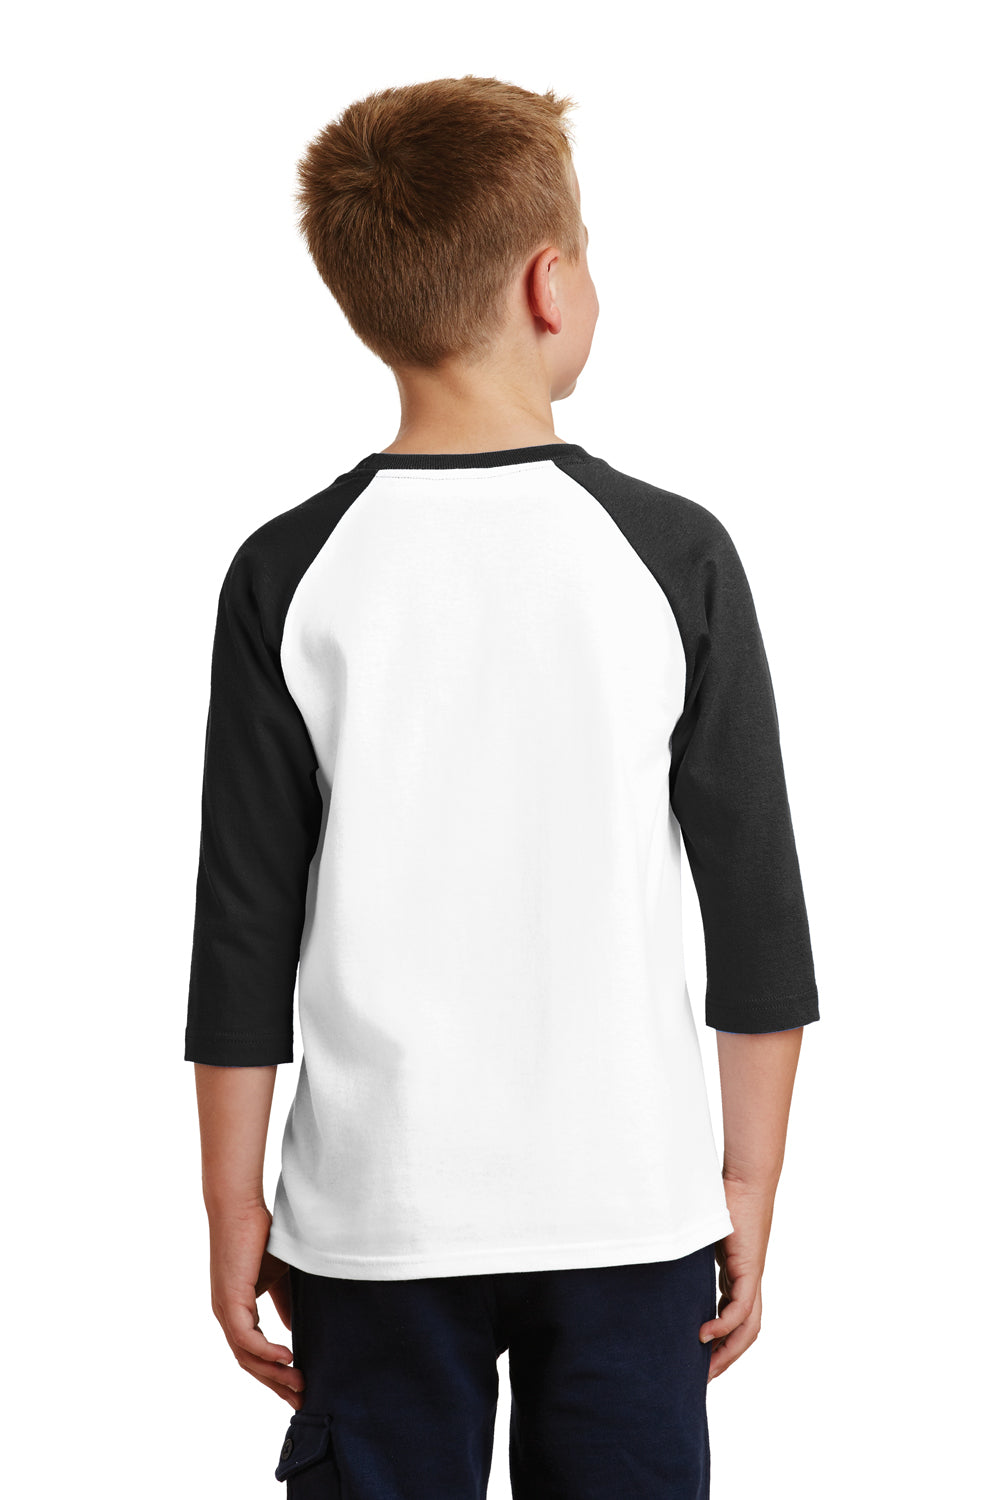 Port & Company PC55YRS Youth Core Moisture Wicking 3/4 Sleeve Crewneck T-Shirt White/Black Back